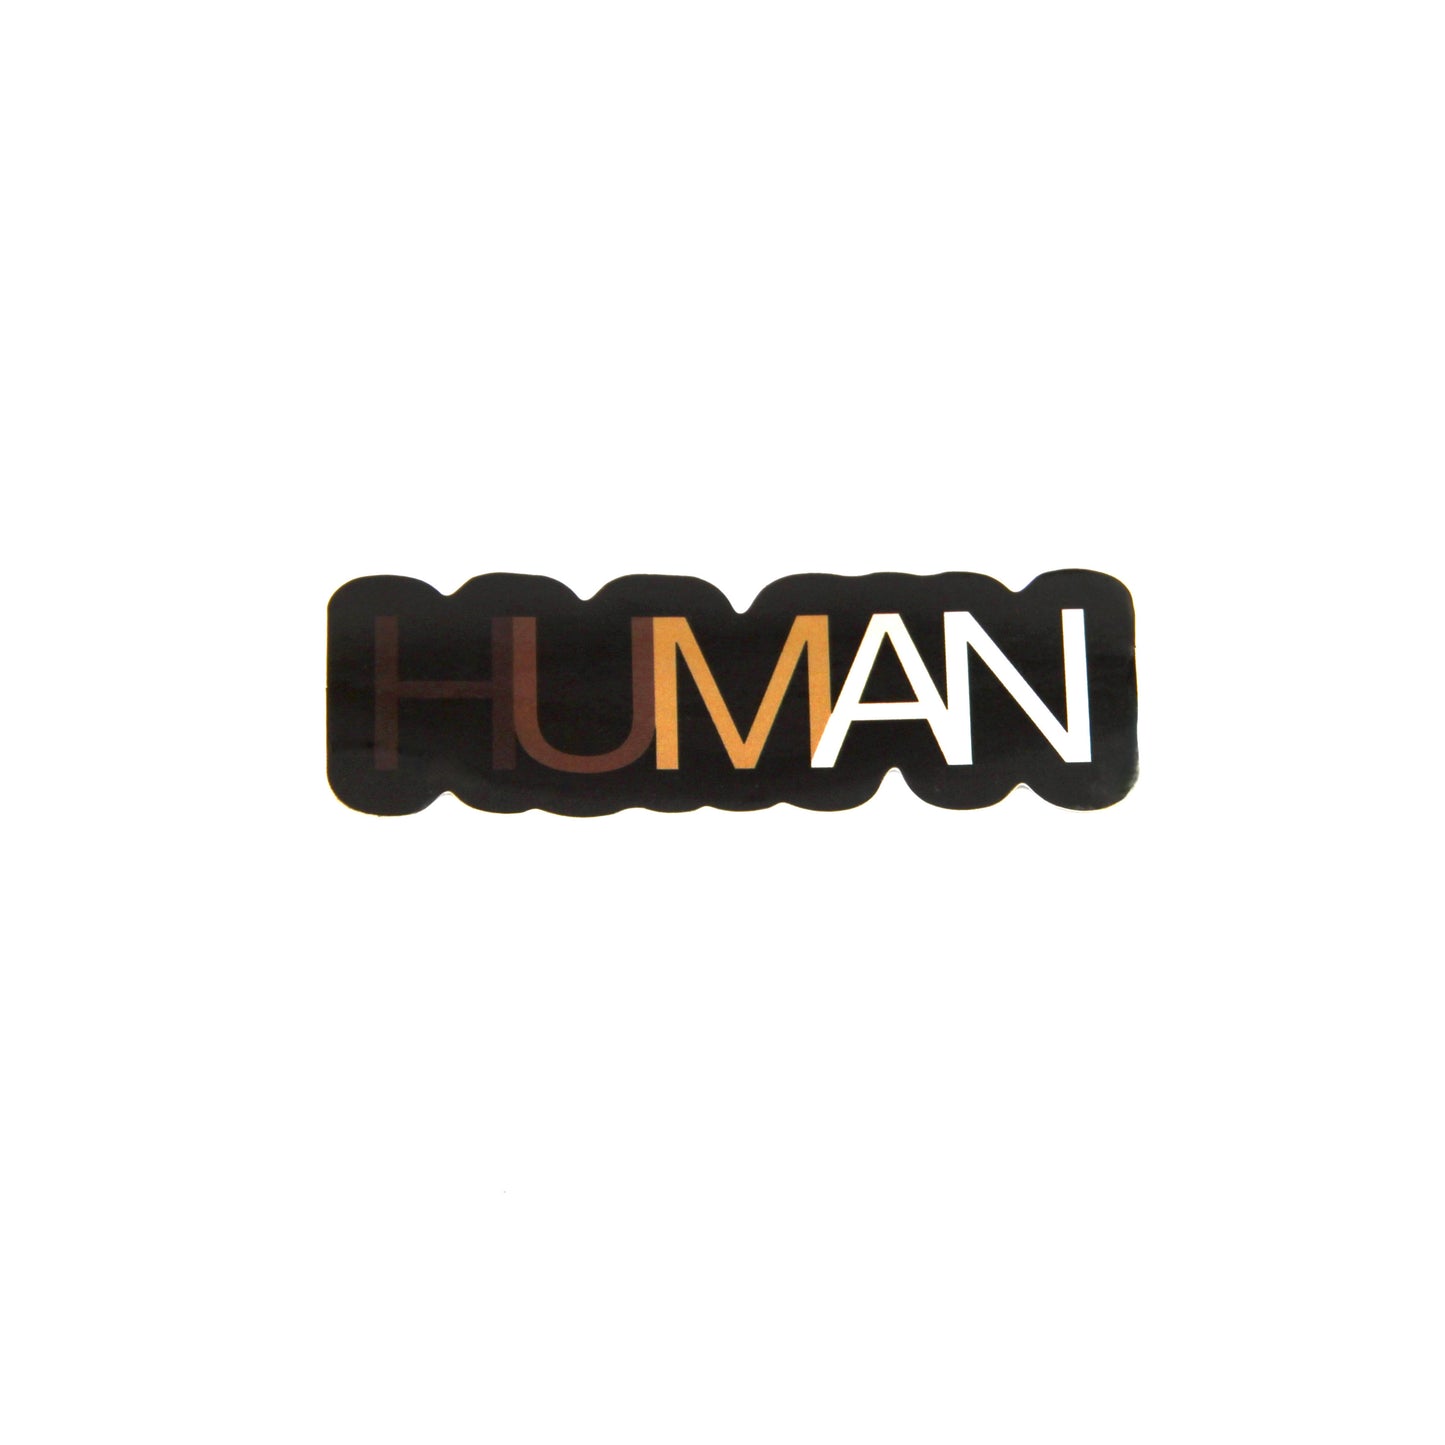 Human Sticker